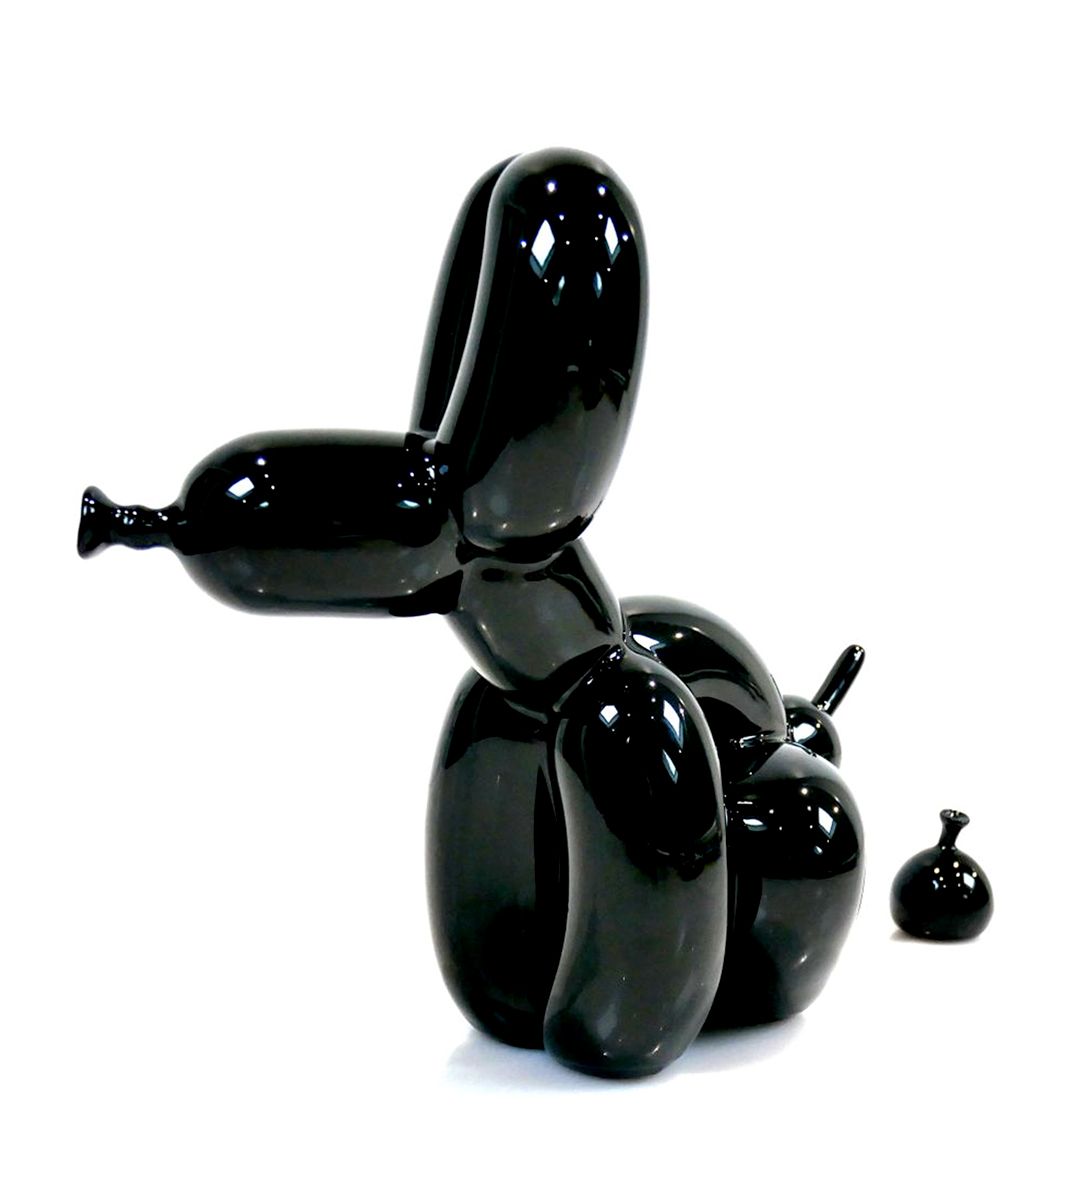 Escultura Popek Black Porcelana Edition por WhatshisName